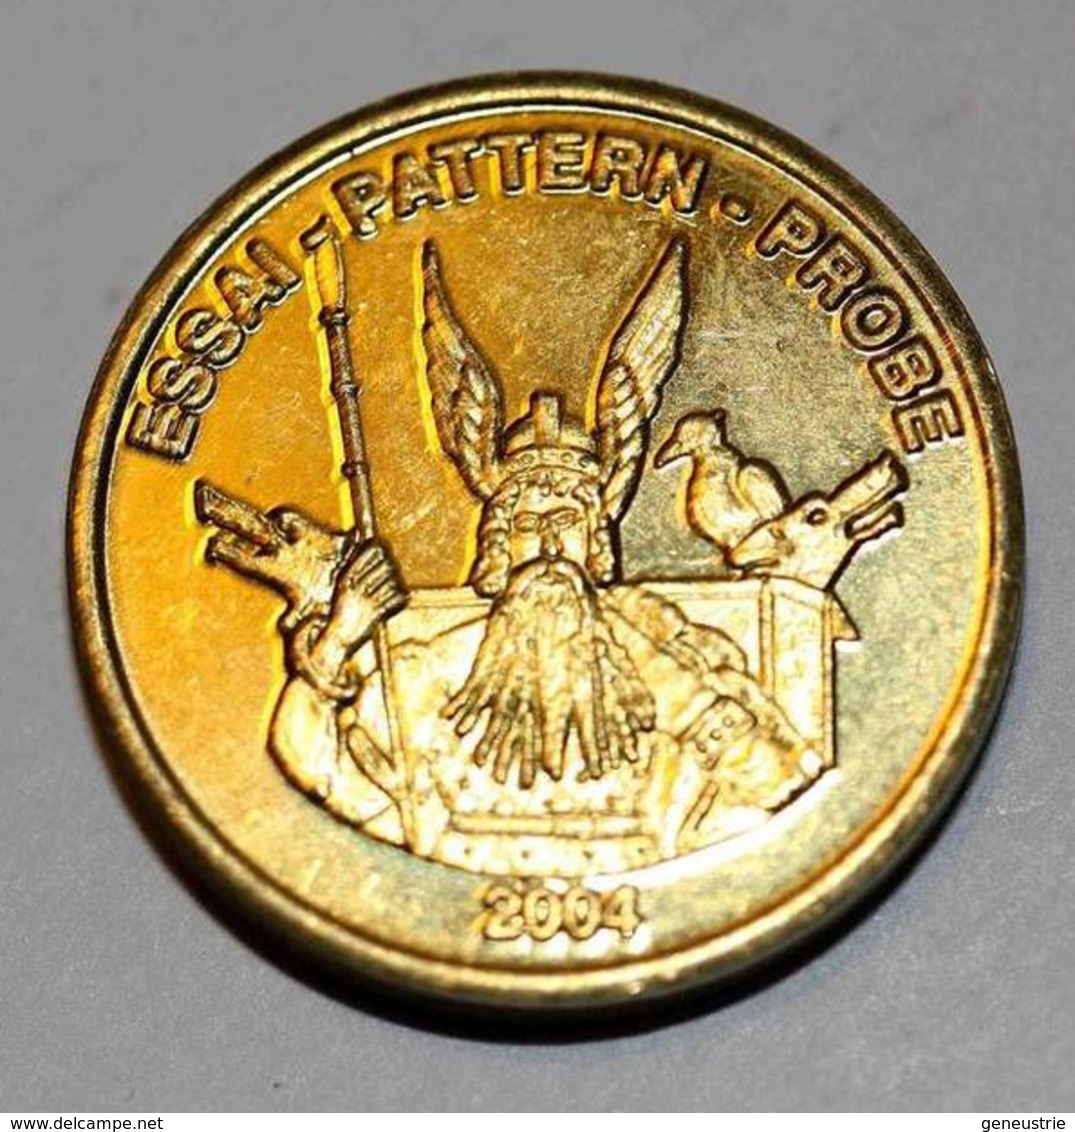 Europ Ceros - Islande - 2004 BU EURO PATTERN EURO ESSAI 10 Cents - Poney Pony / Viking Odin (?) 10 Euro Cent - Pruebas Privadas